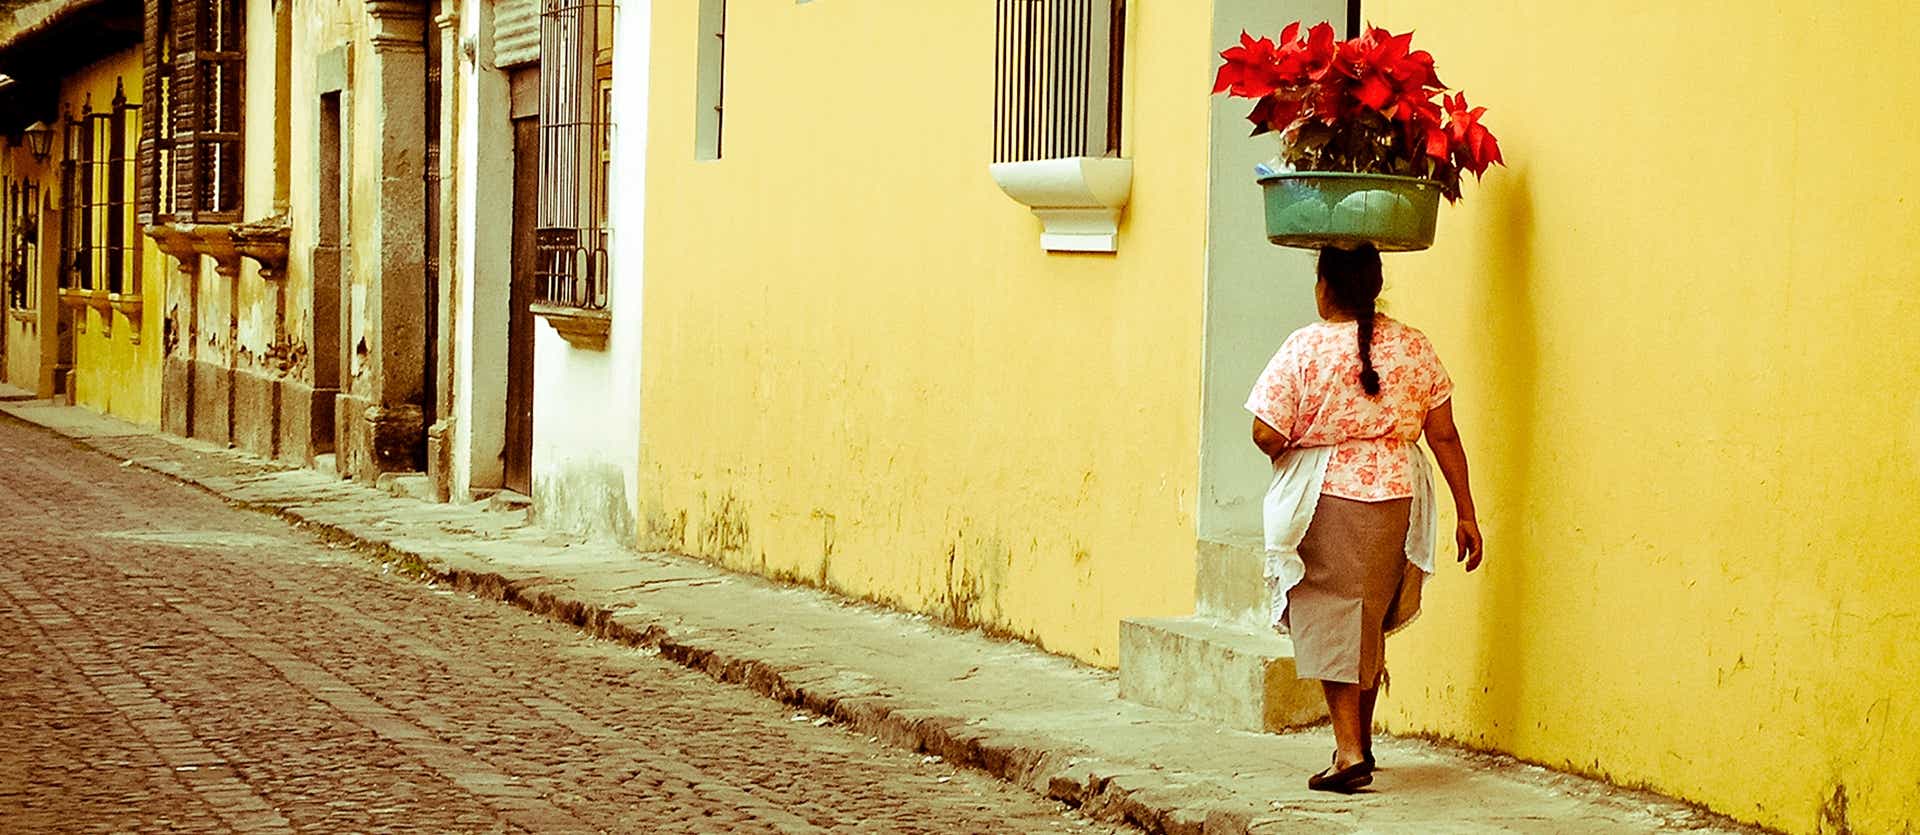 Cobbled Streets <span class="iconos separador"></span> Antigua Guatemala